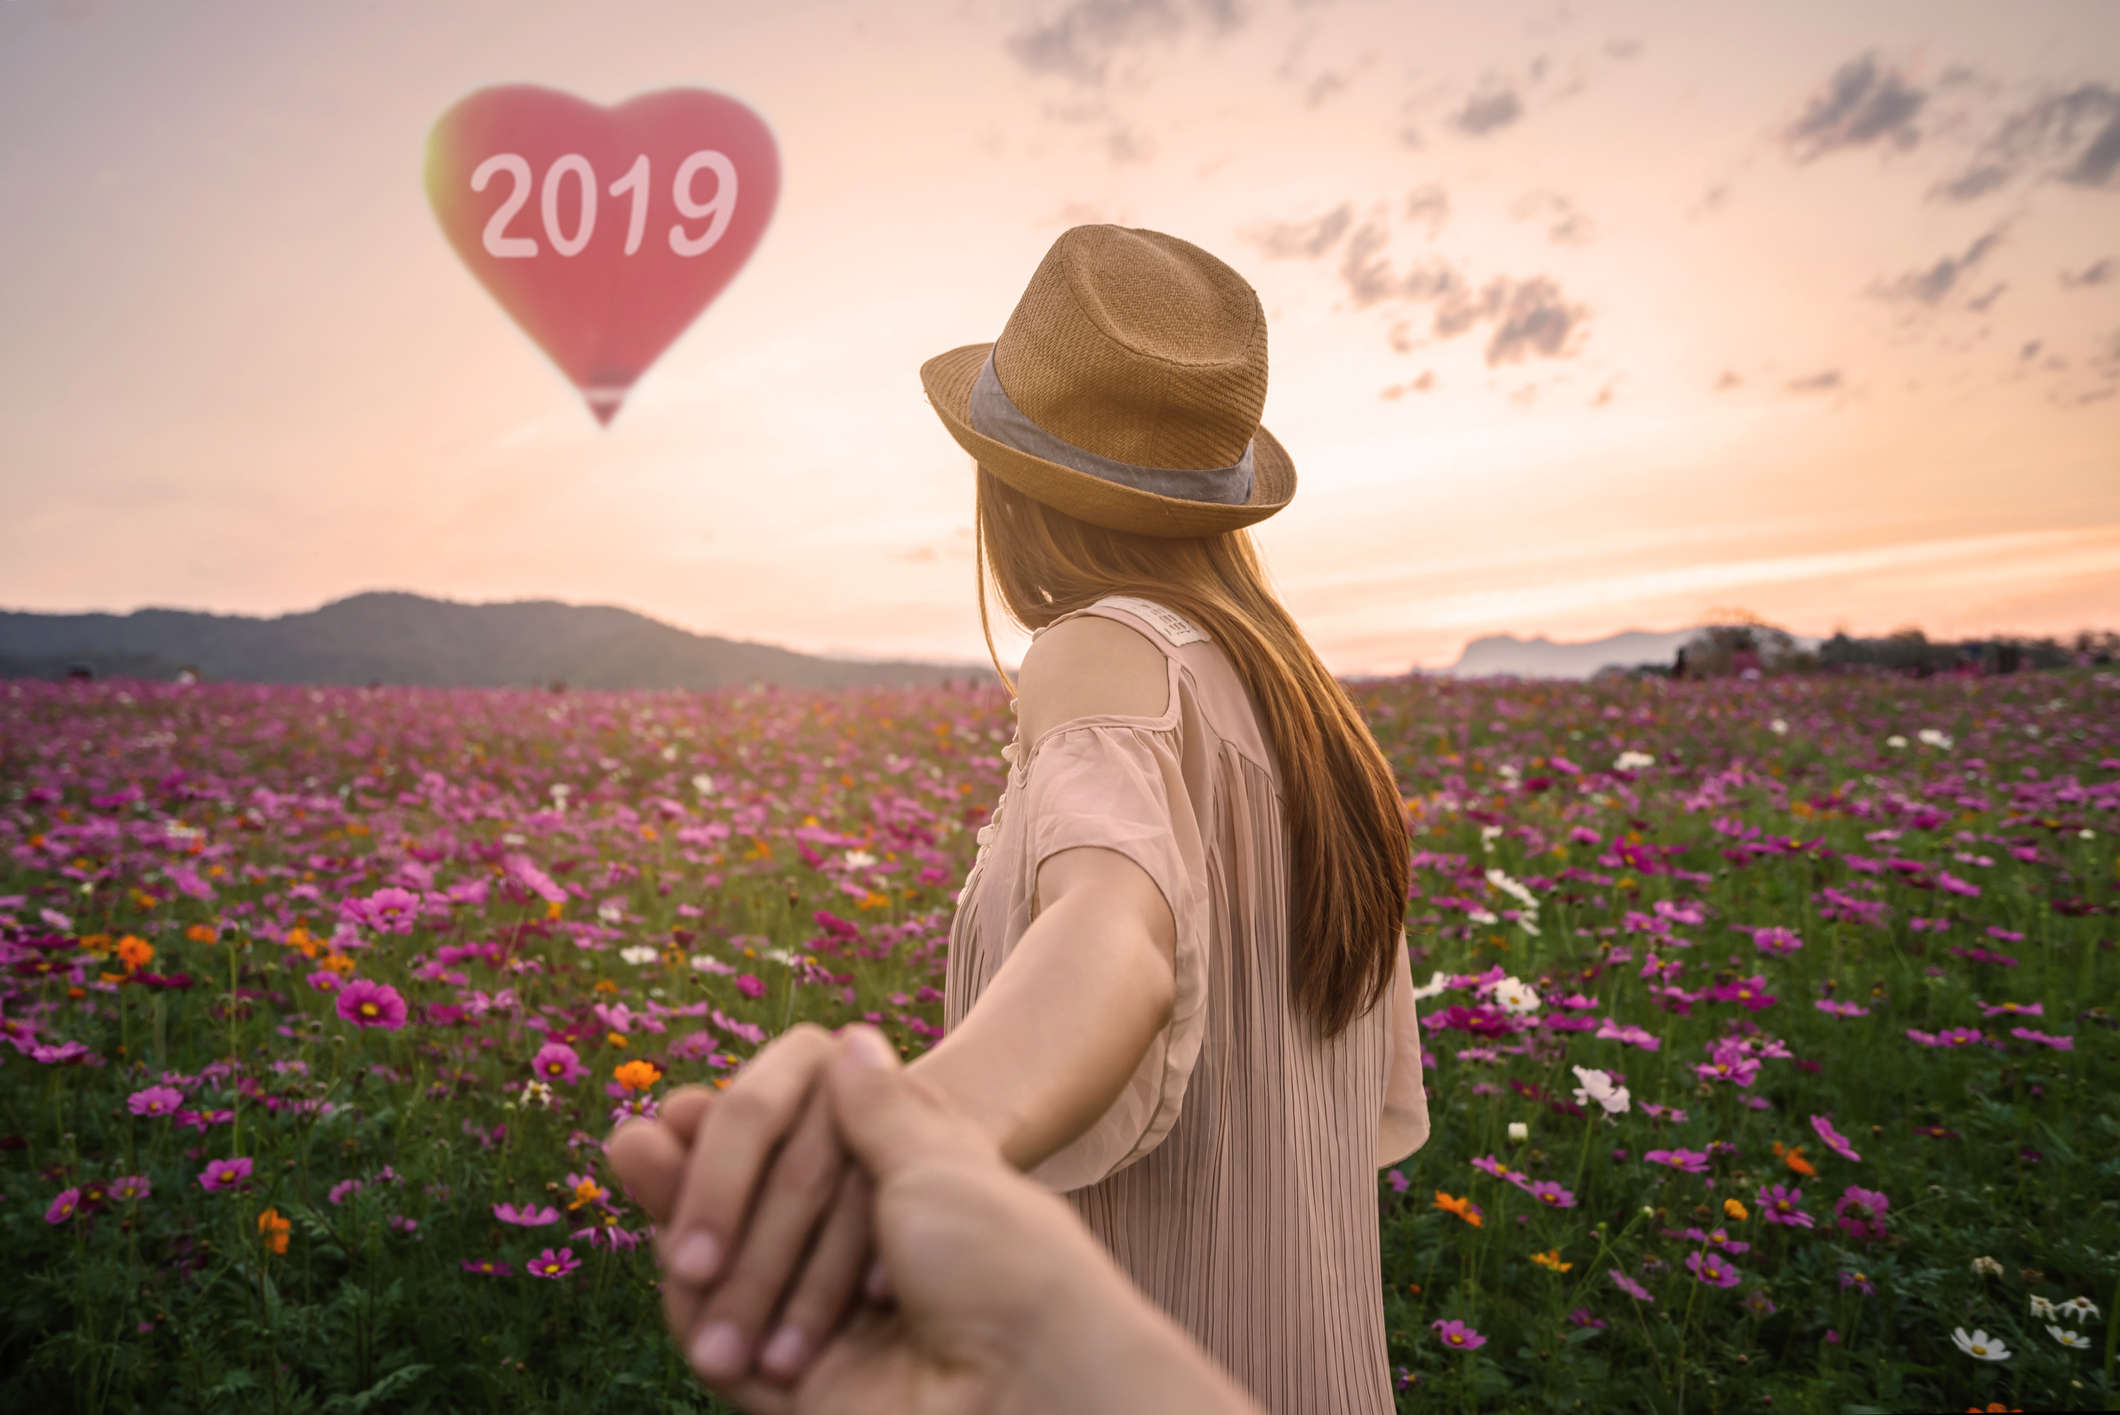 Honeymoon destinations for 2019 couples!